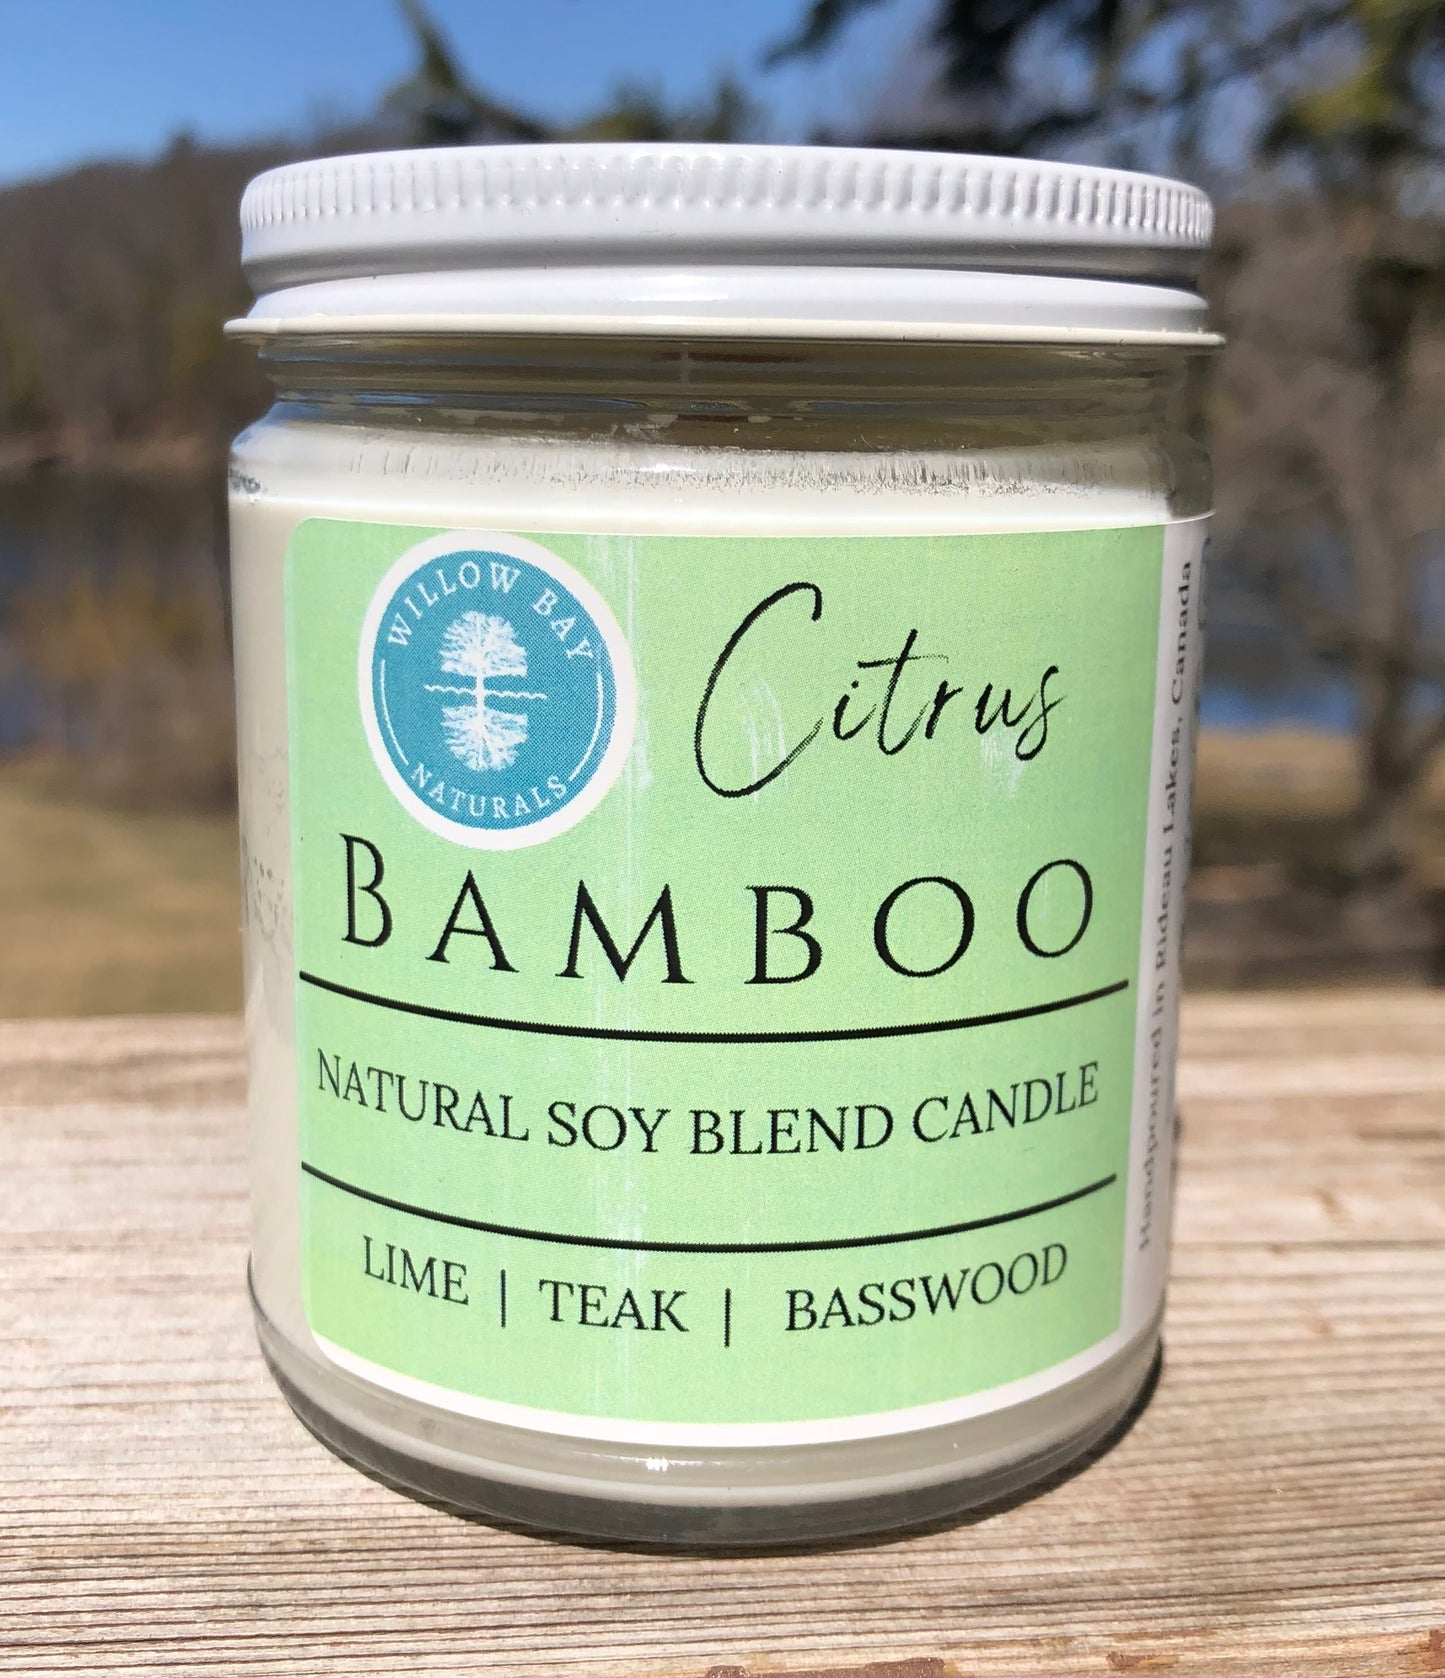 Bamboo Citrus Candle